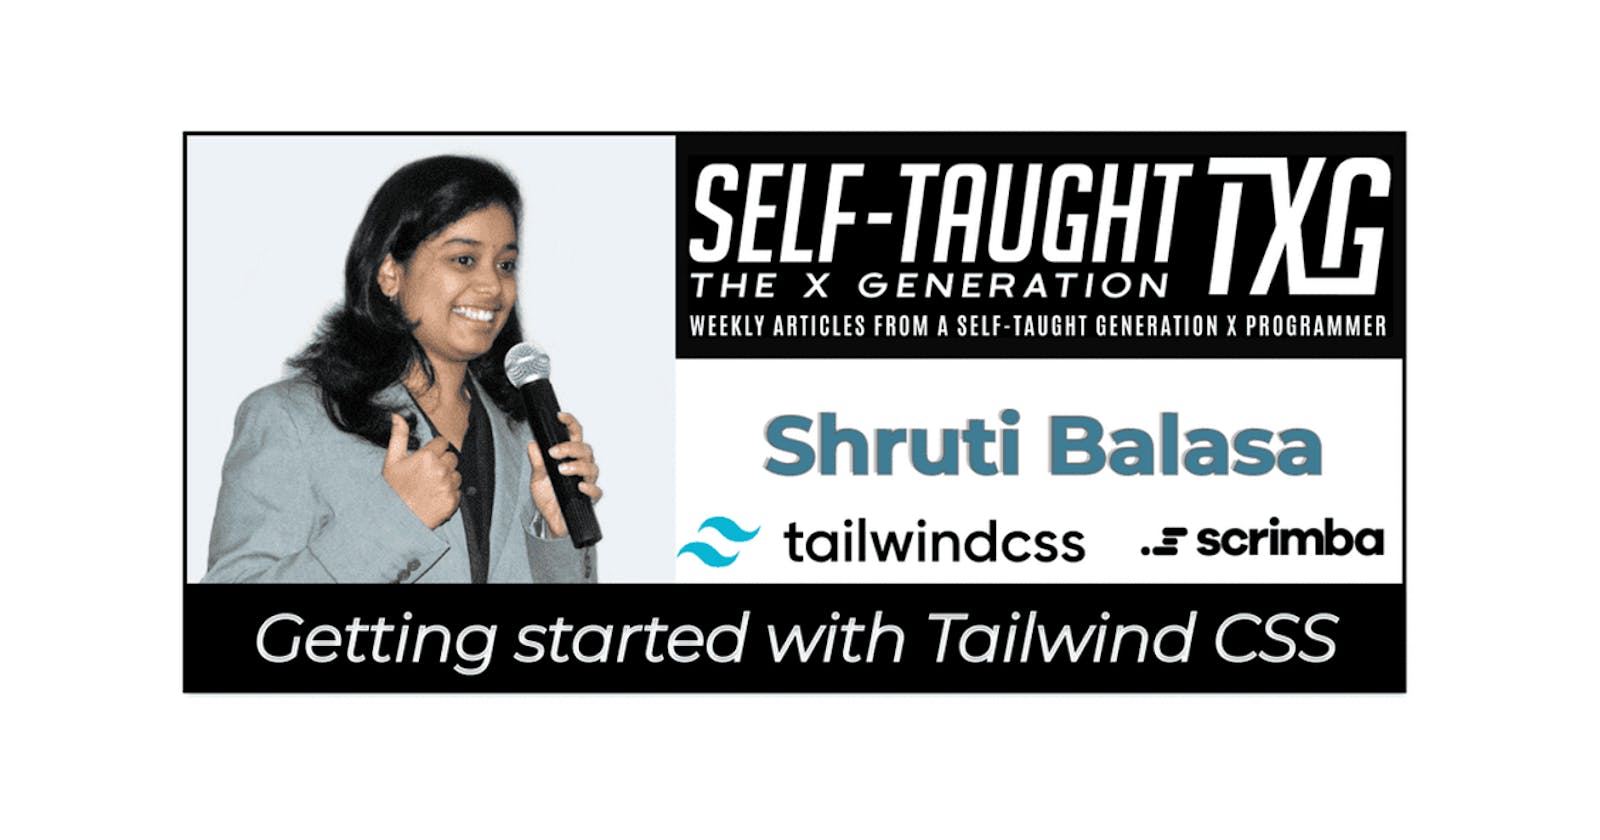 Shruti Balasa: Getting started with Tailwind CSS